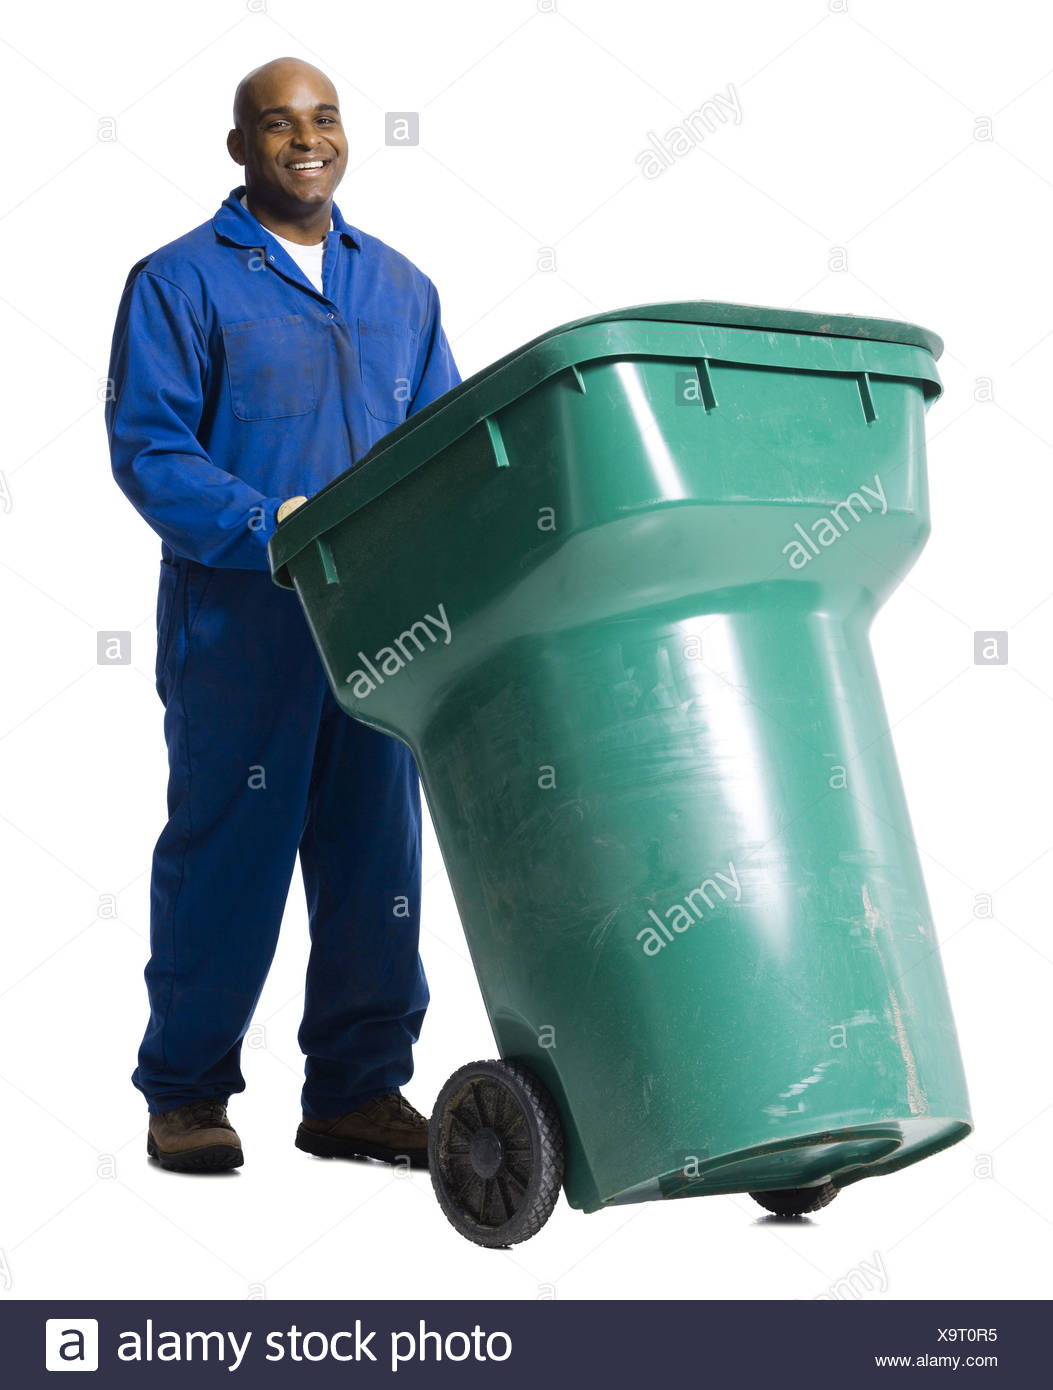 Image result for garbage man